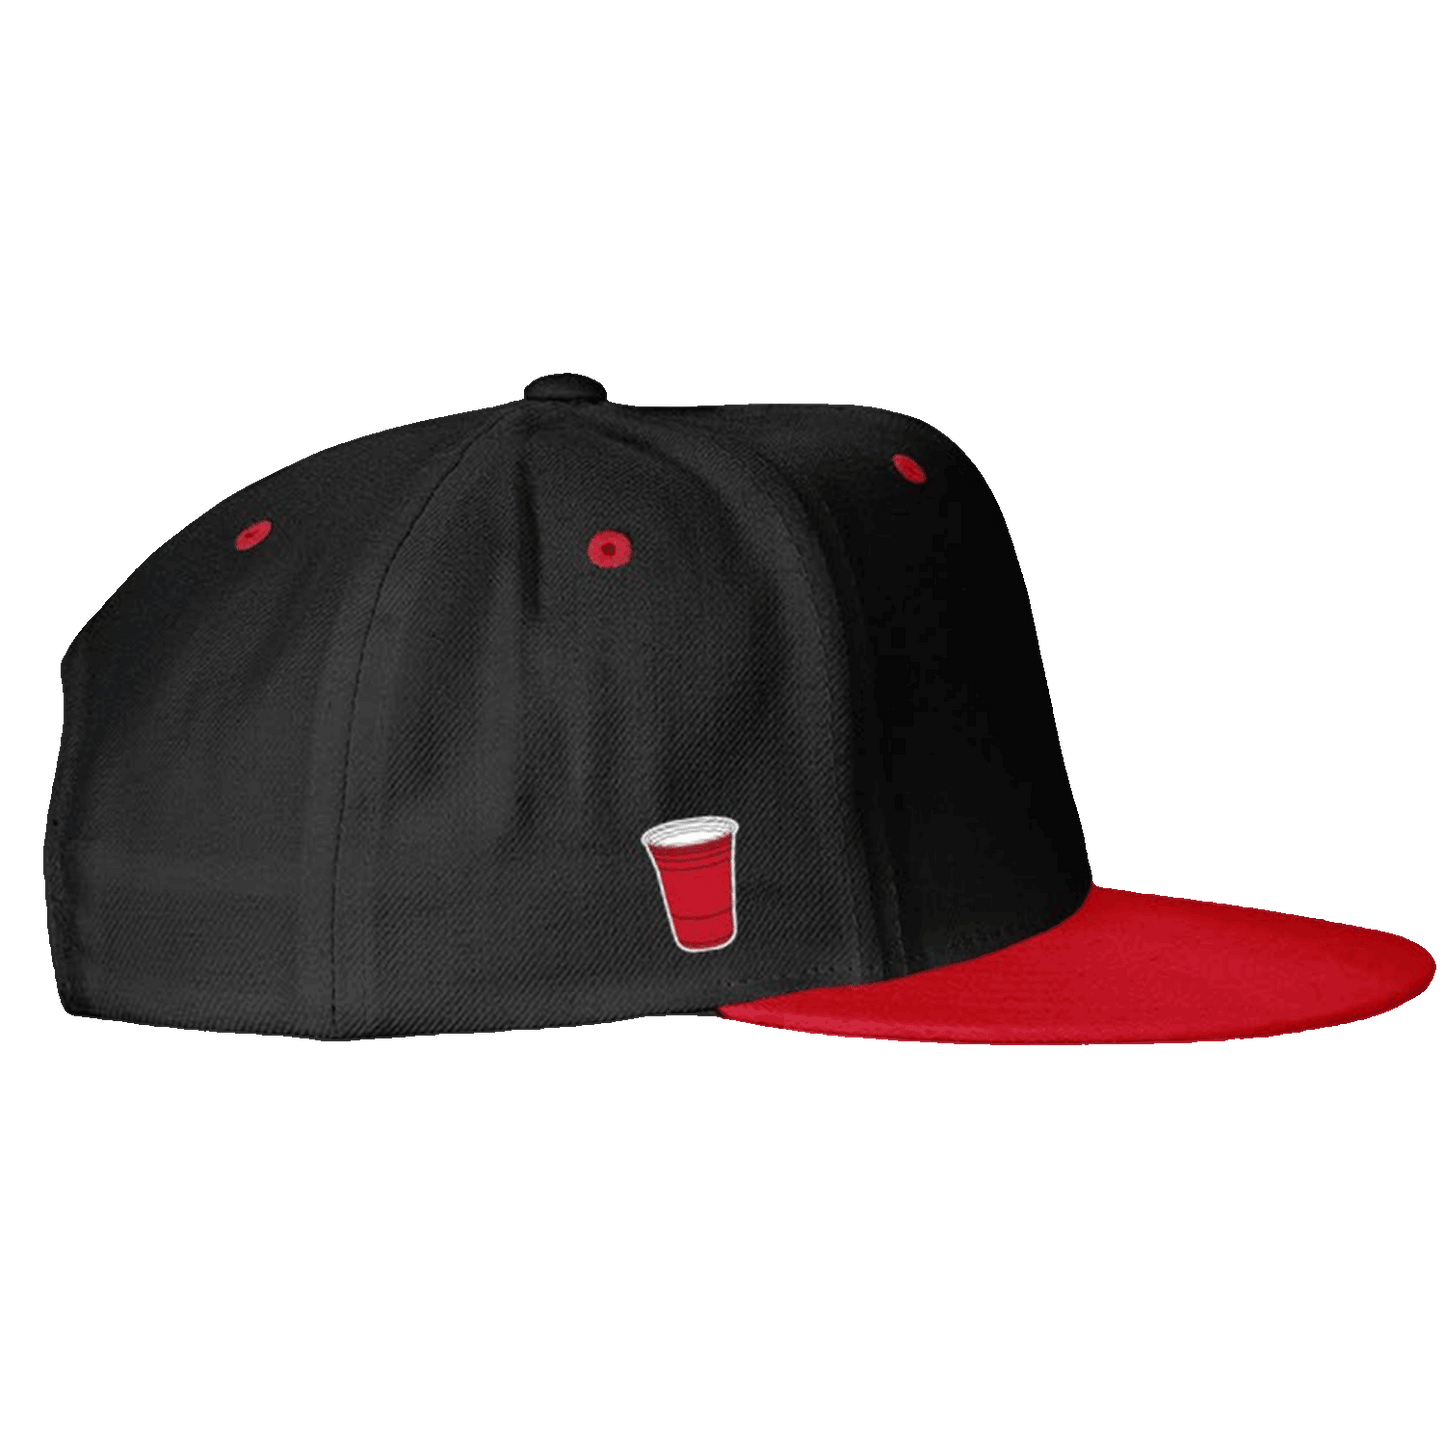 Beer Pong Cap Red side